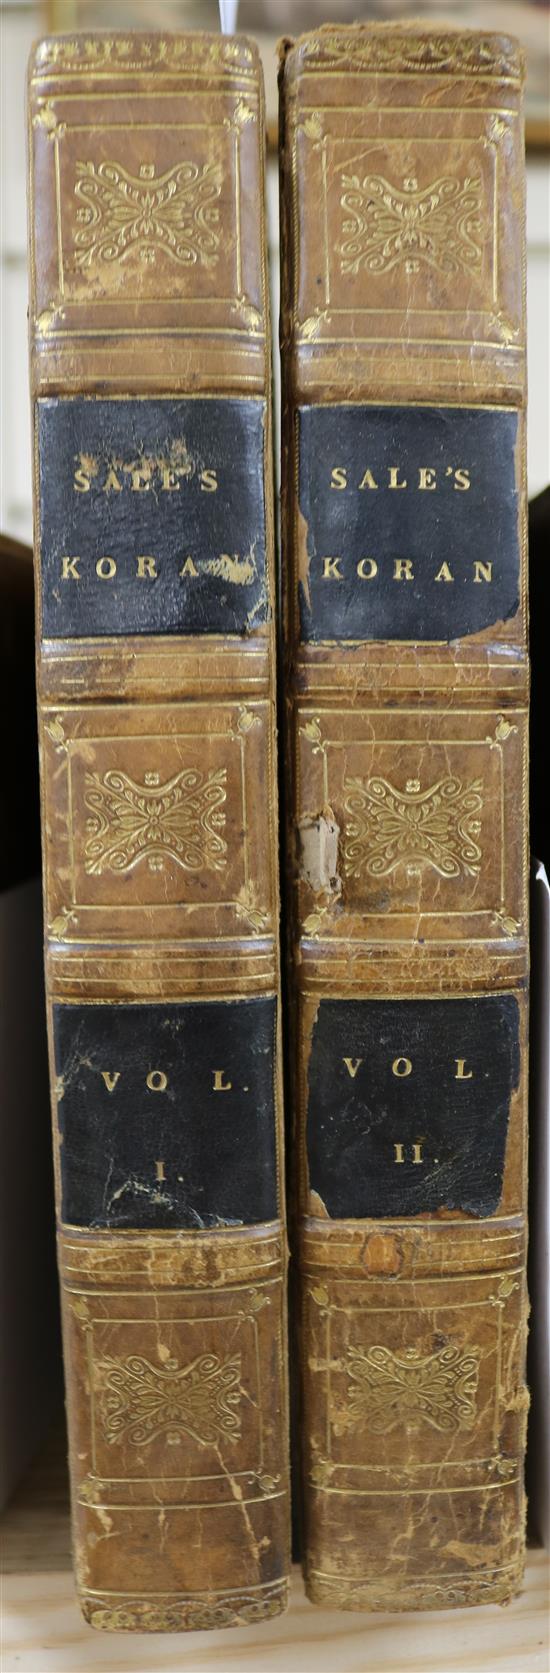 Sale, George - The Koran,